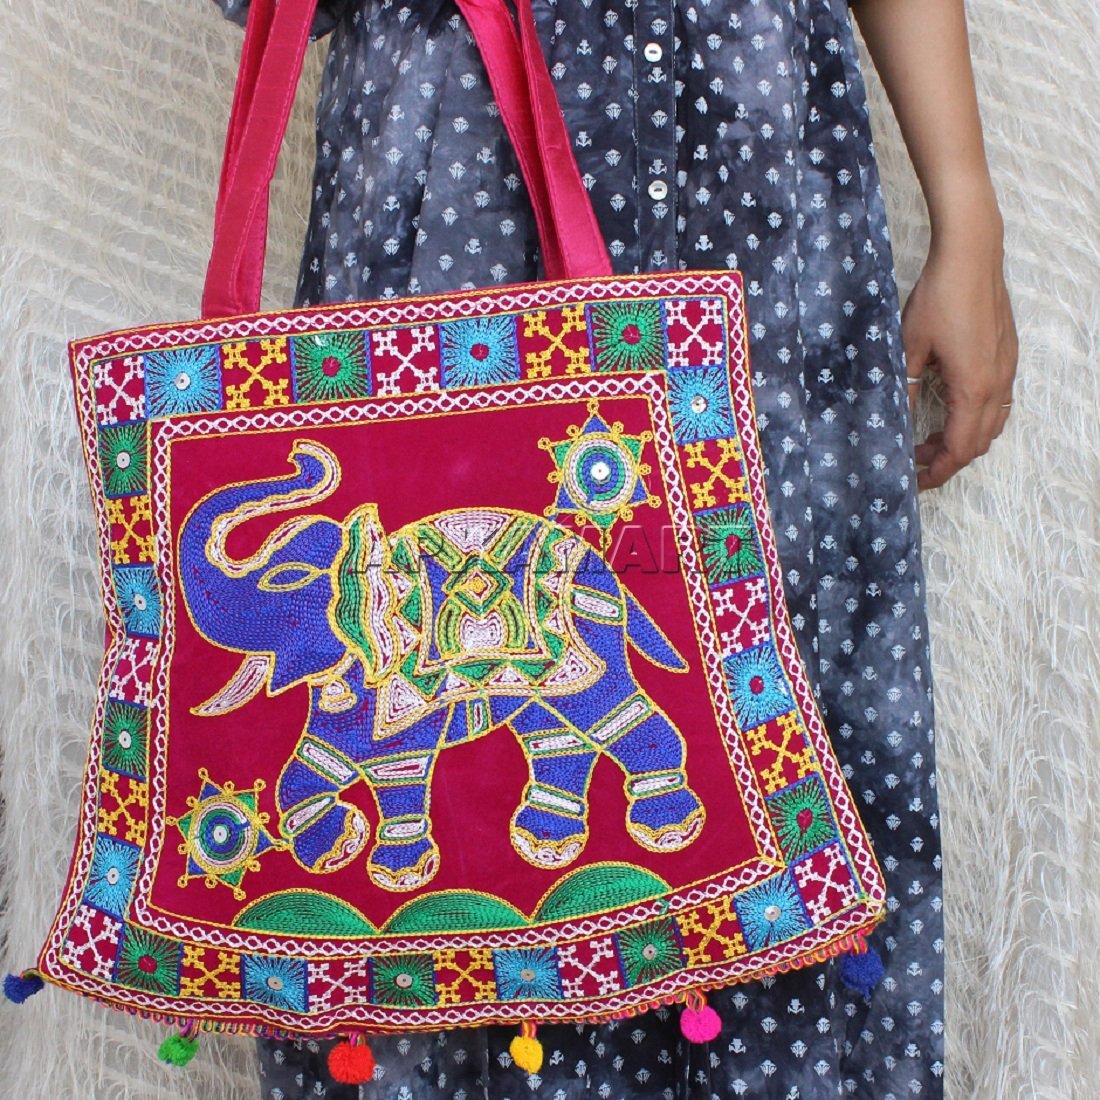 Women Handbags Bata Mochi - Buy Women Handbags Bata Mochi online in India